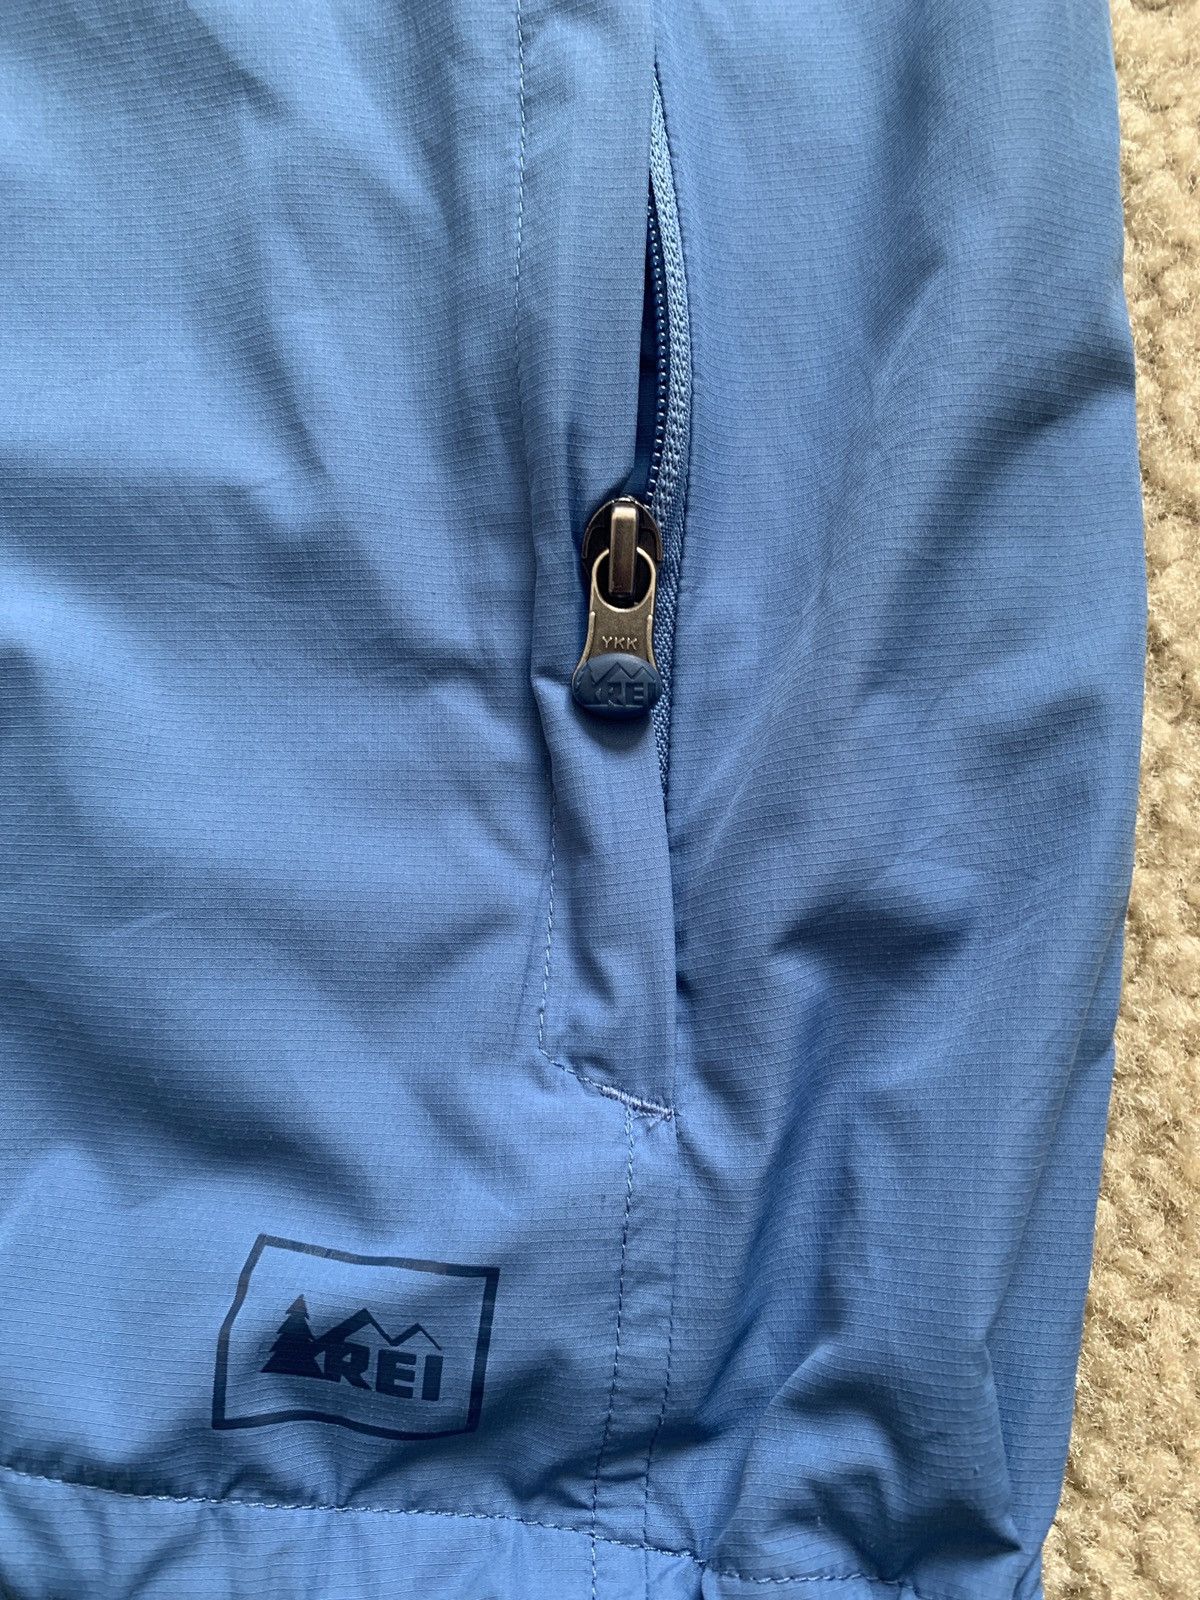 Rei Rei Raincoat Jacket (Blue) Size US S / EU 44-46 / 1 - 5 Thumbnail